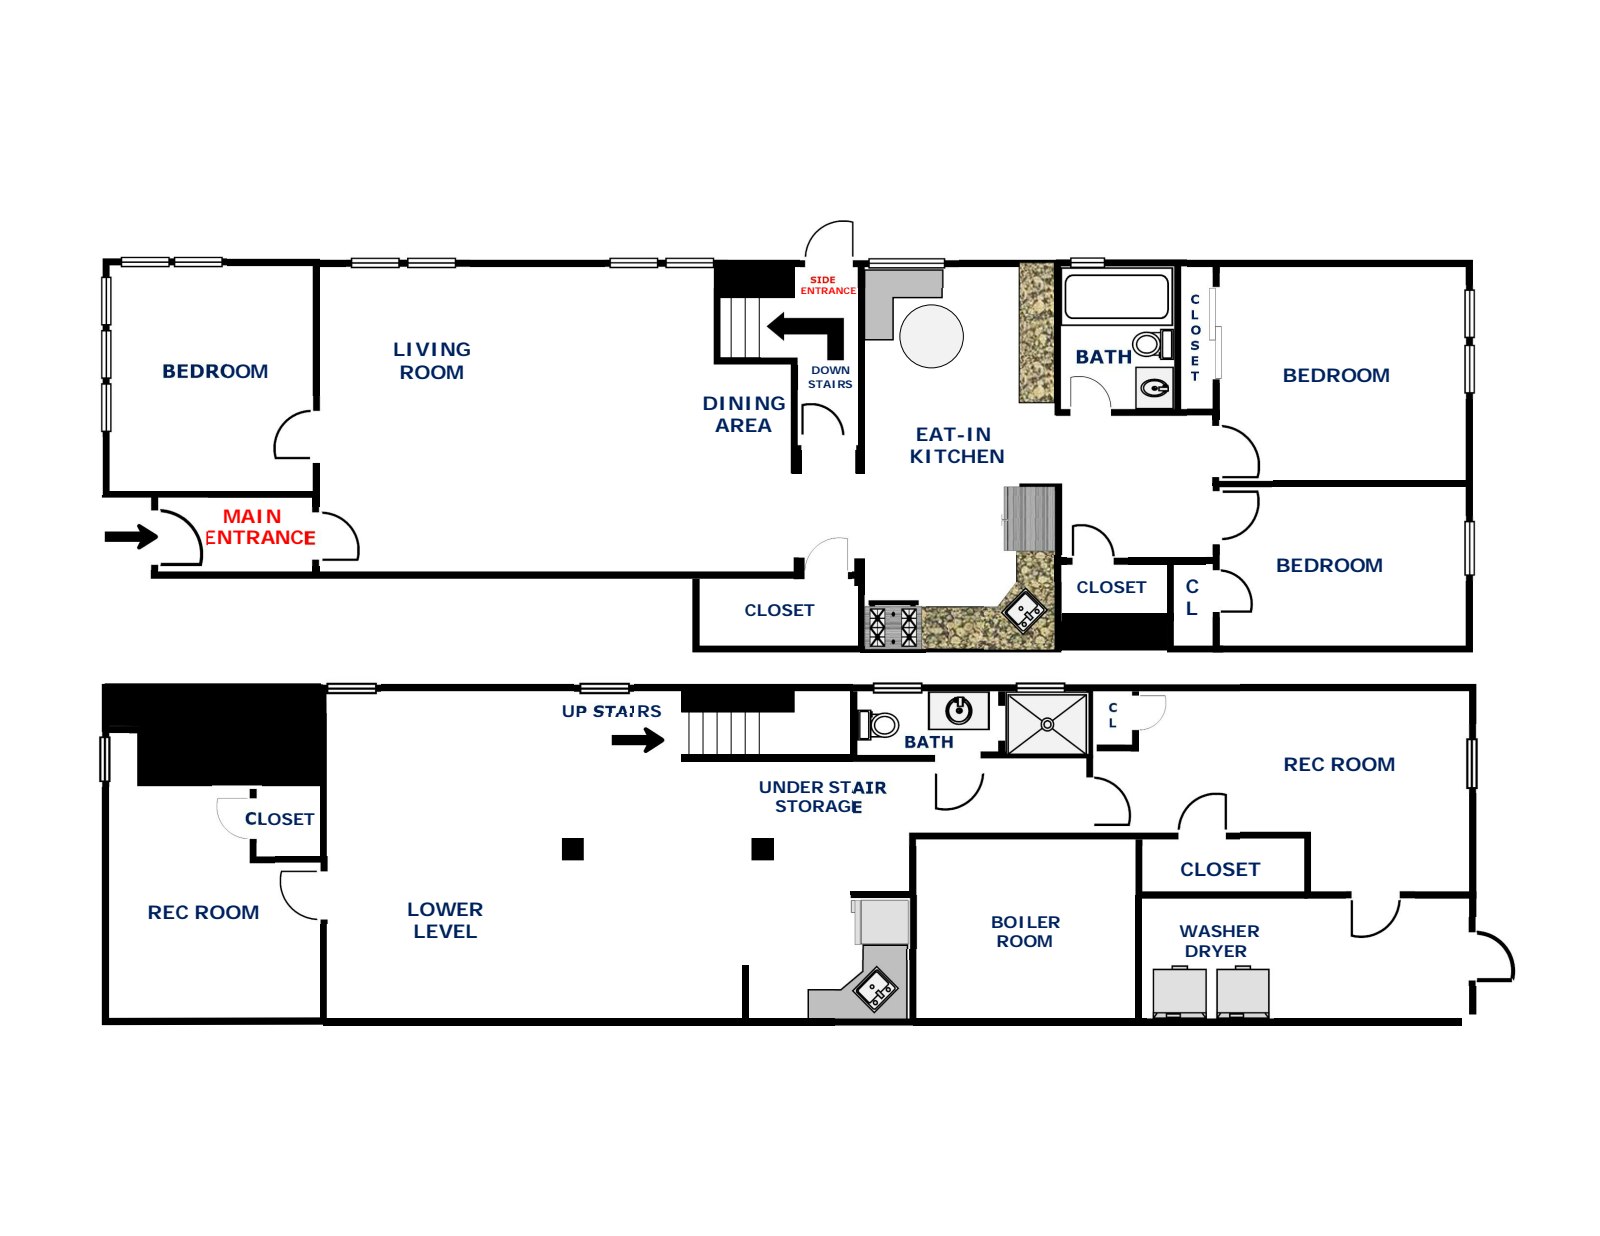 Floorplan for 1706, 11th Avenue, 1